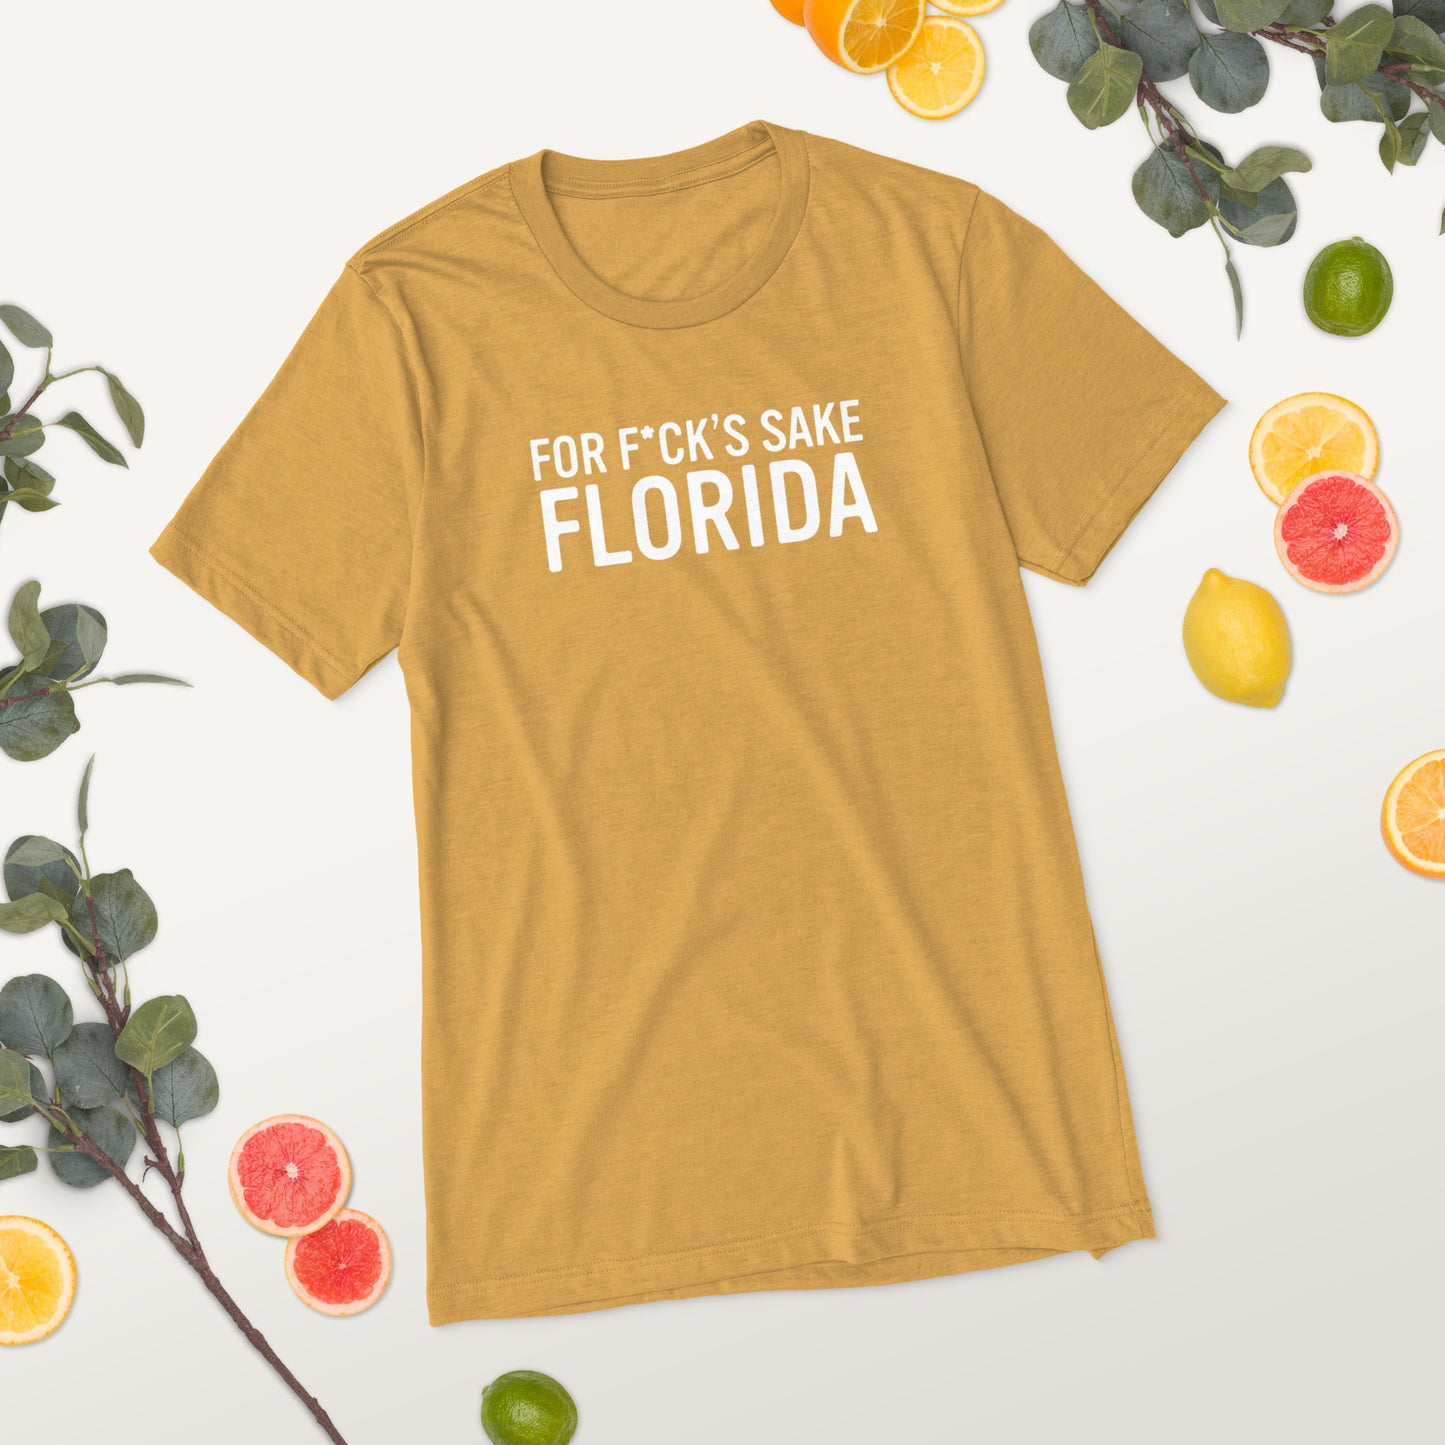 For F&ck's Sake Florida Short sleeve t-shirt